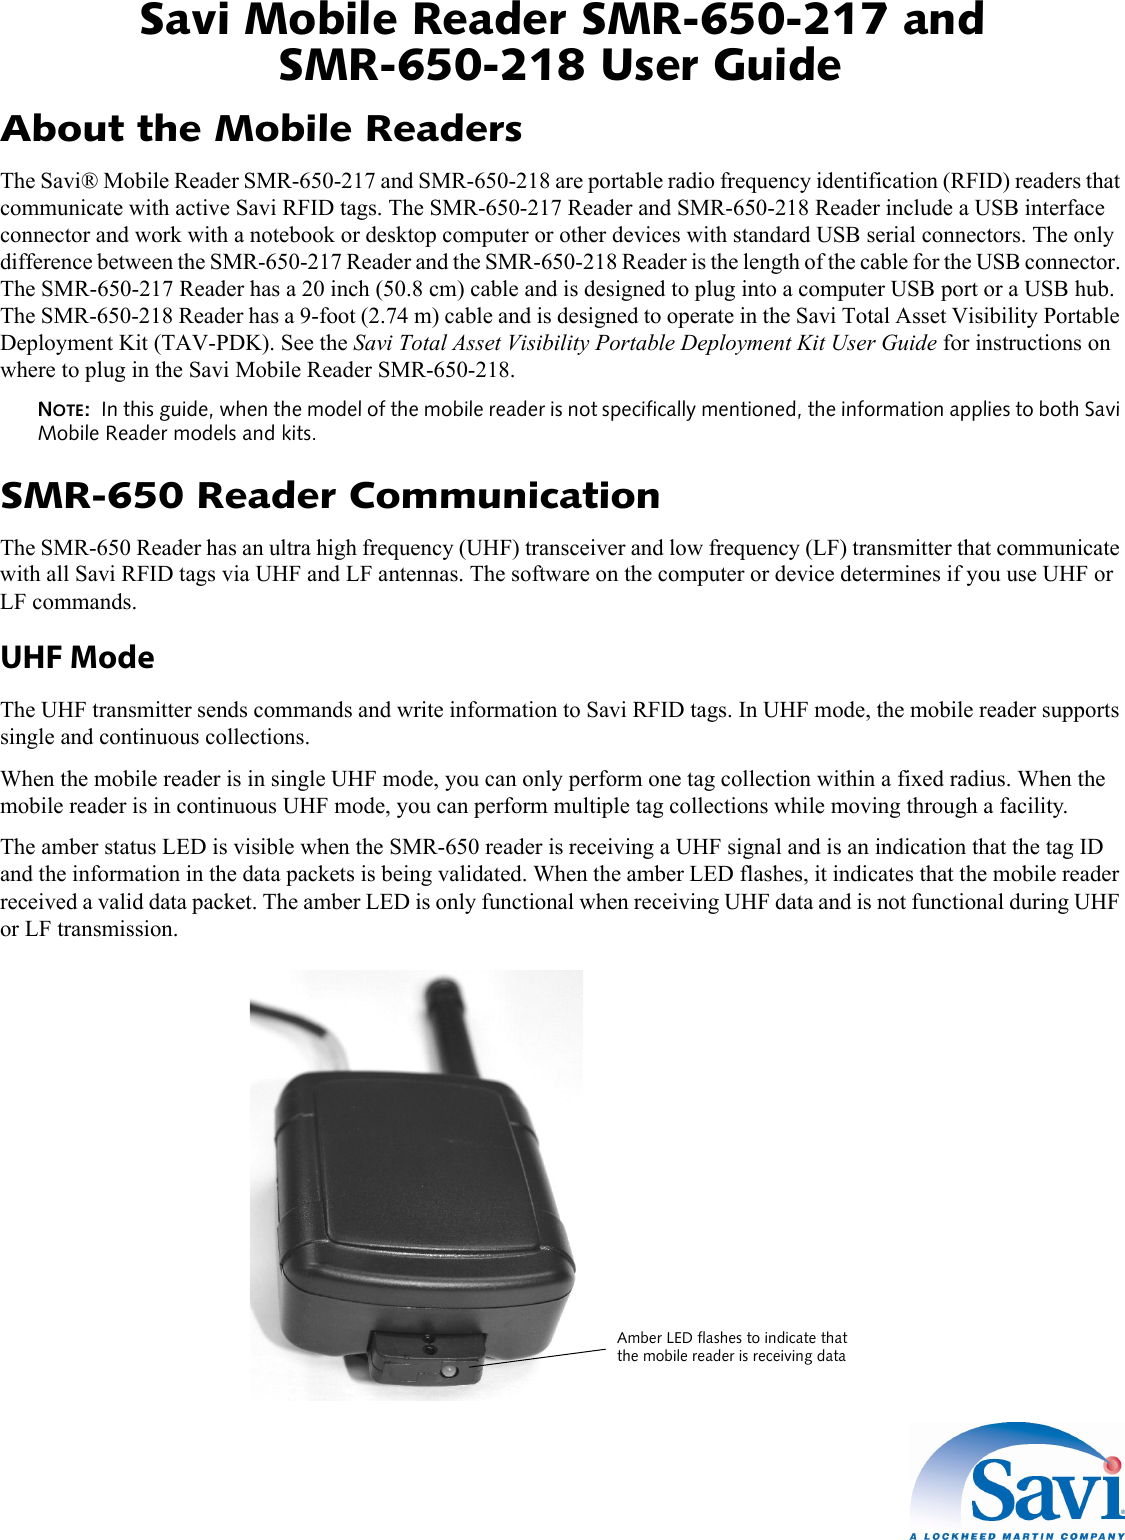 Technologic varactor 650 user manual pdf